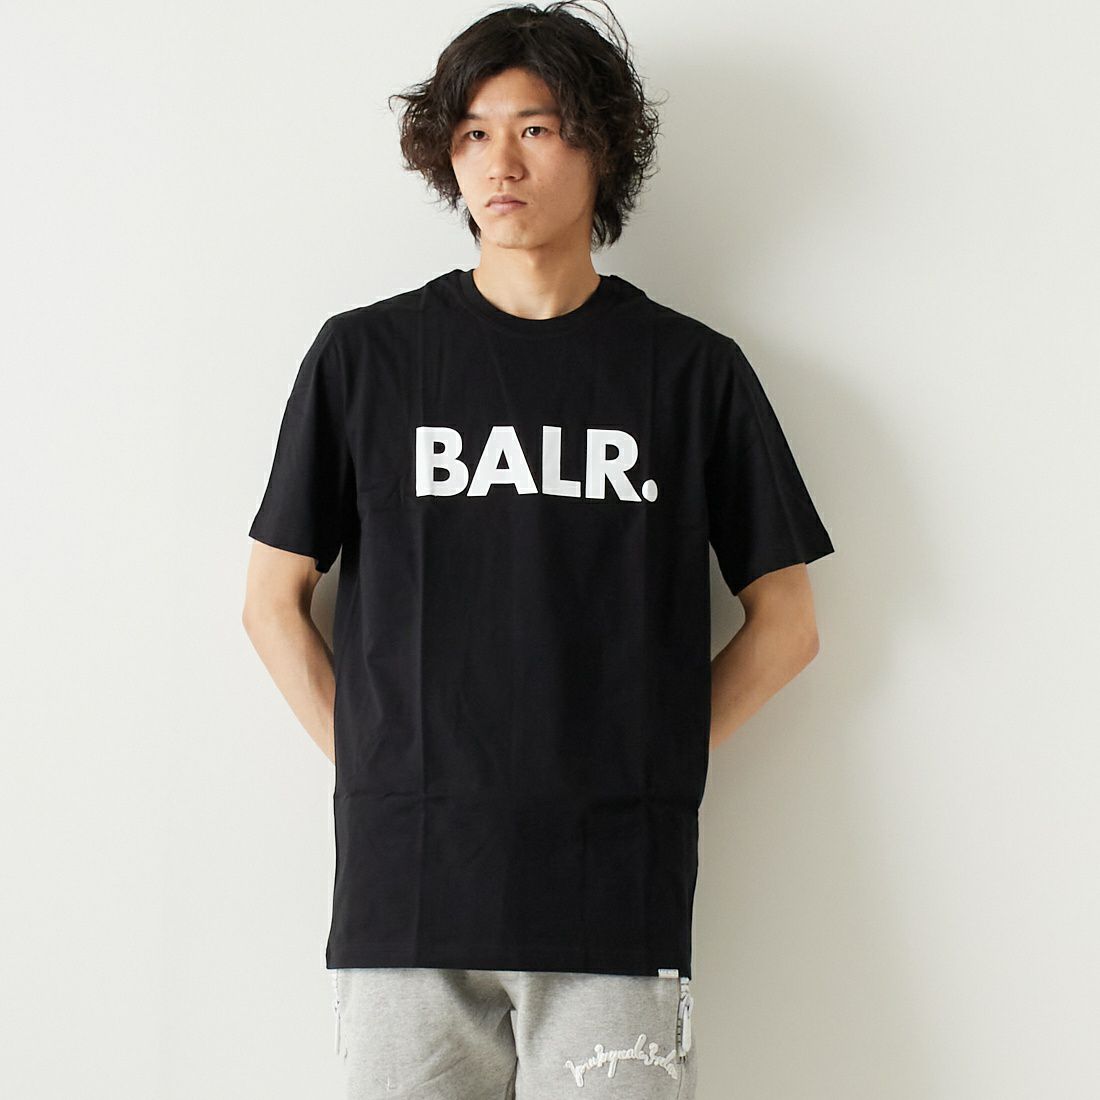 BALR. [ボーラー] ロゴプリントストレートTシャツ [B11121048]